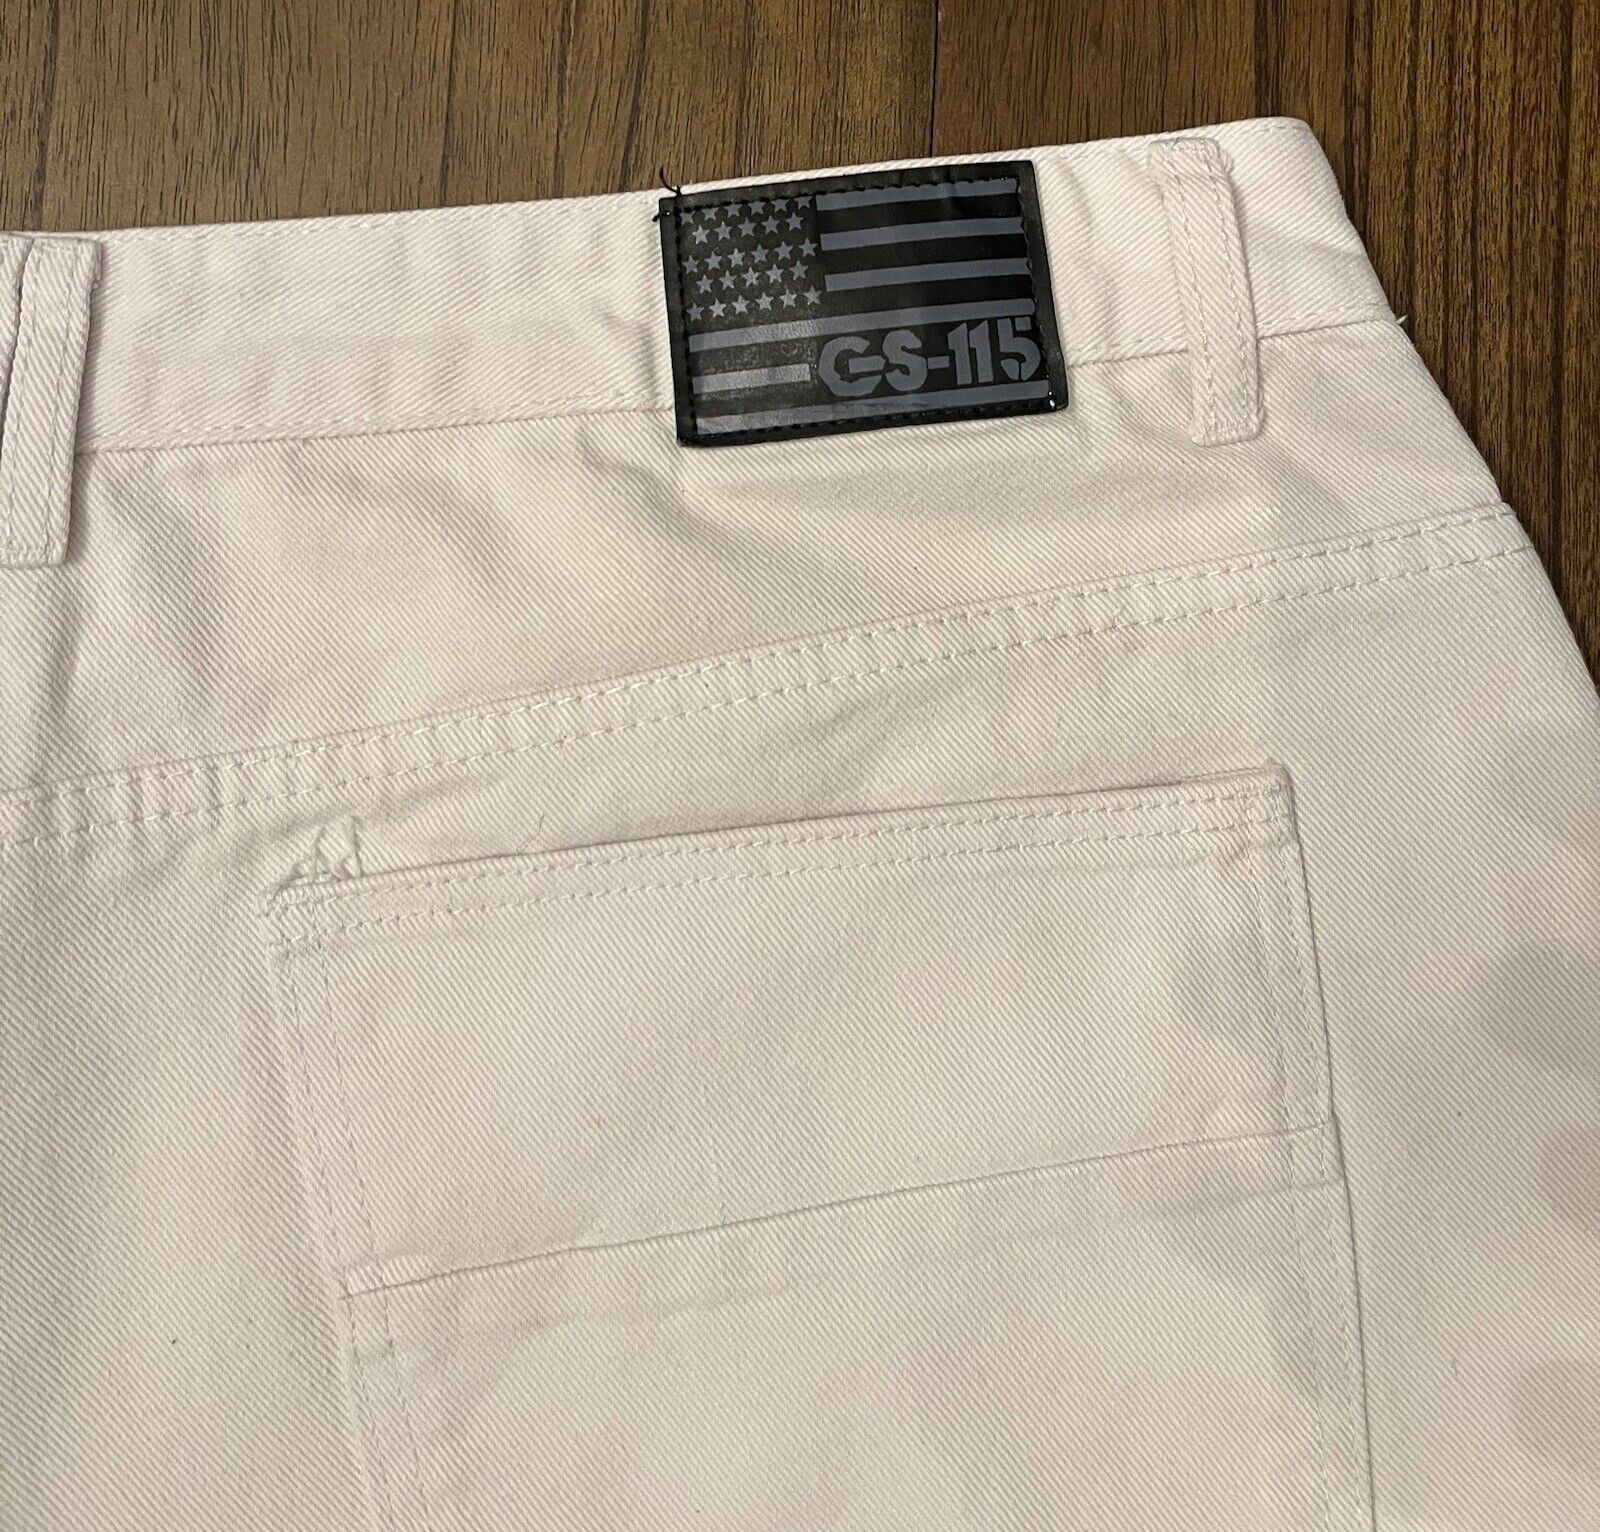 GS-115 Denim Jean Shorts- White - Mens Size: 44 - image 6